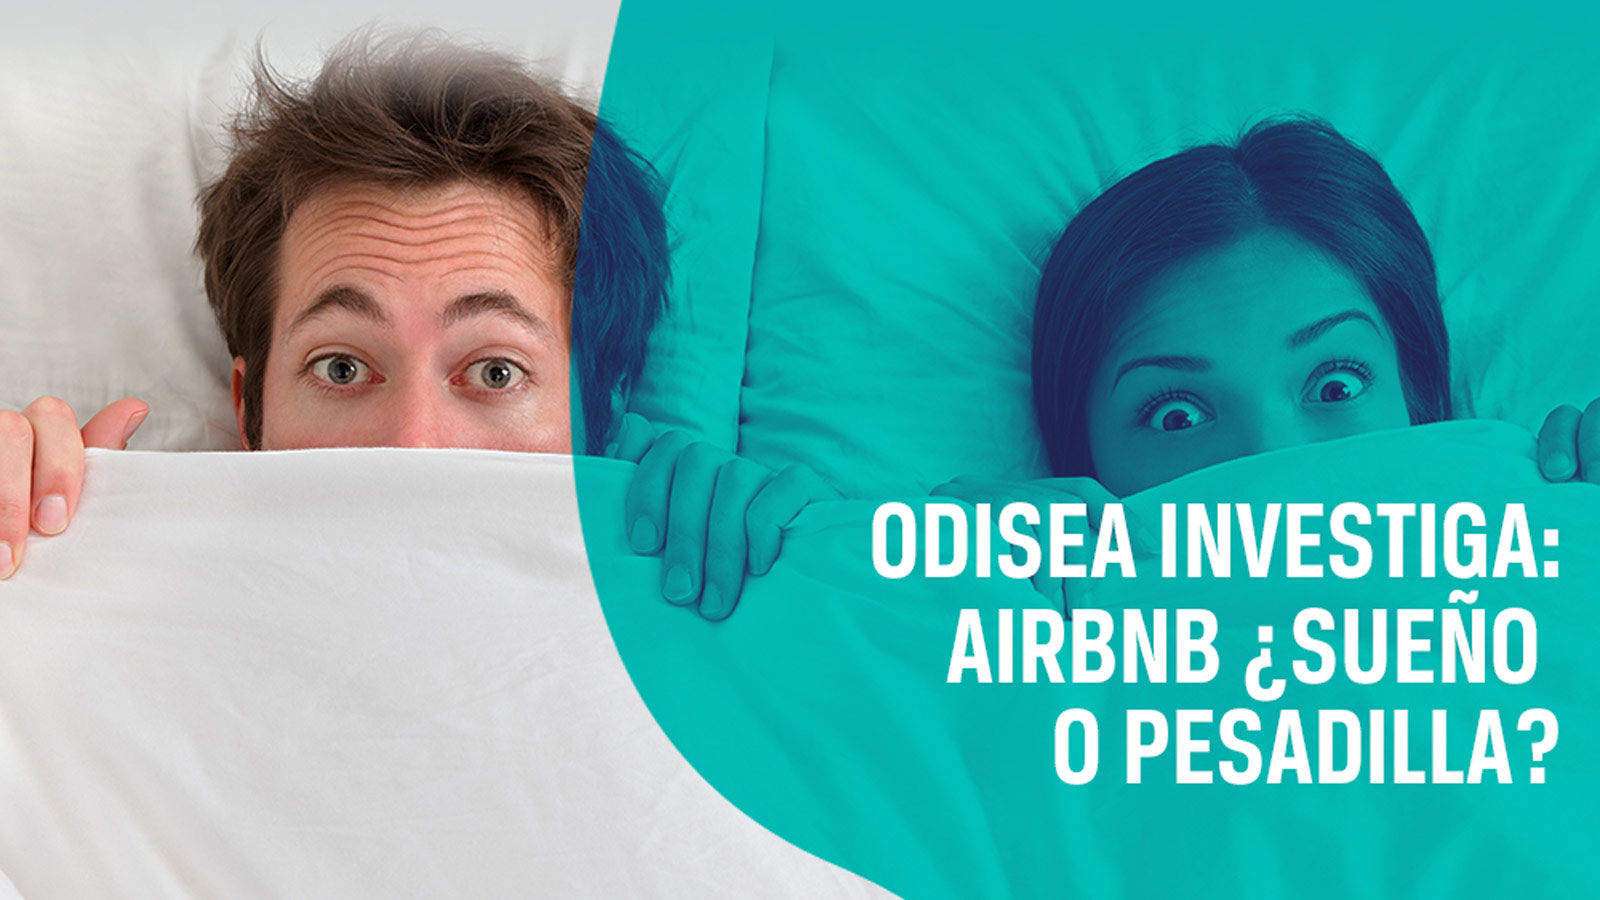 Odisea investiga: Airbnb, ¿sueño o pesadilla?